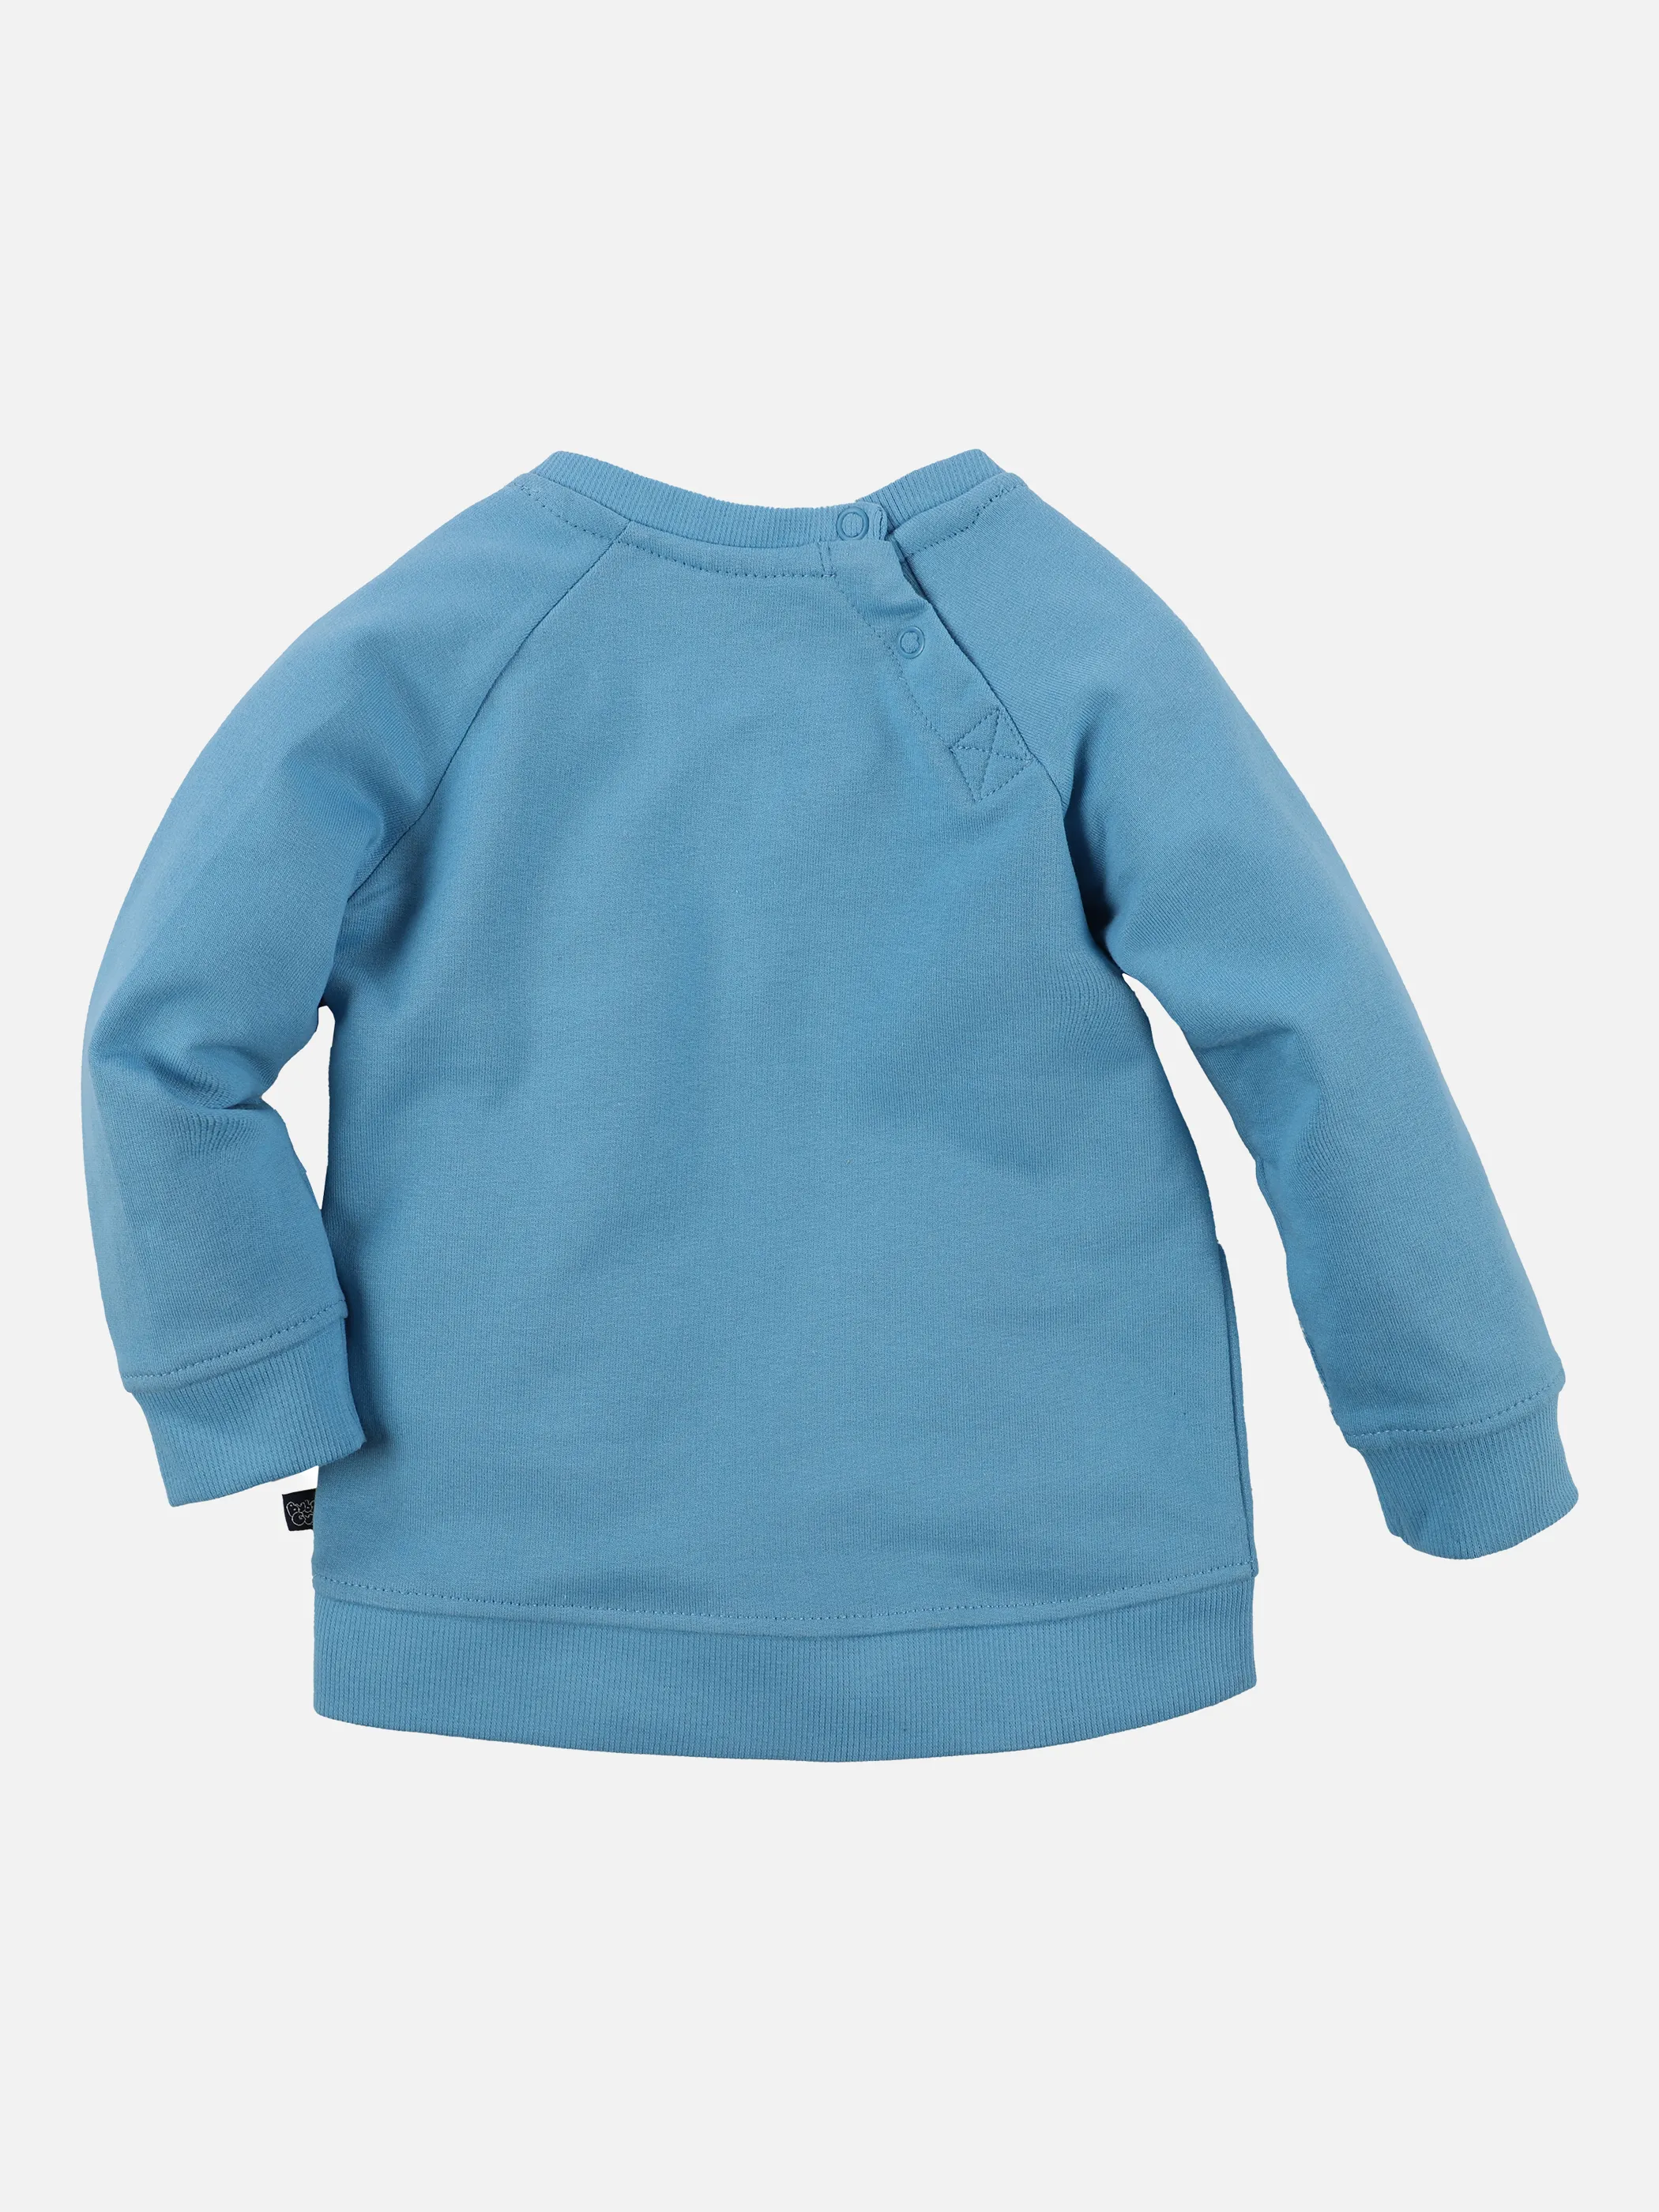 Bubble Gum BJ Sweatshirt mit Applikation Blau 875611 BLAU 2